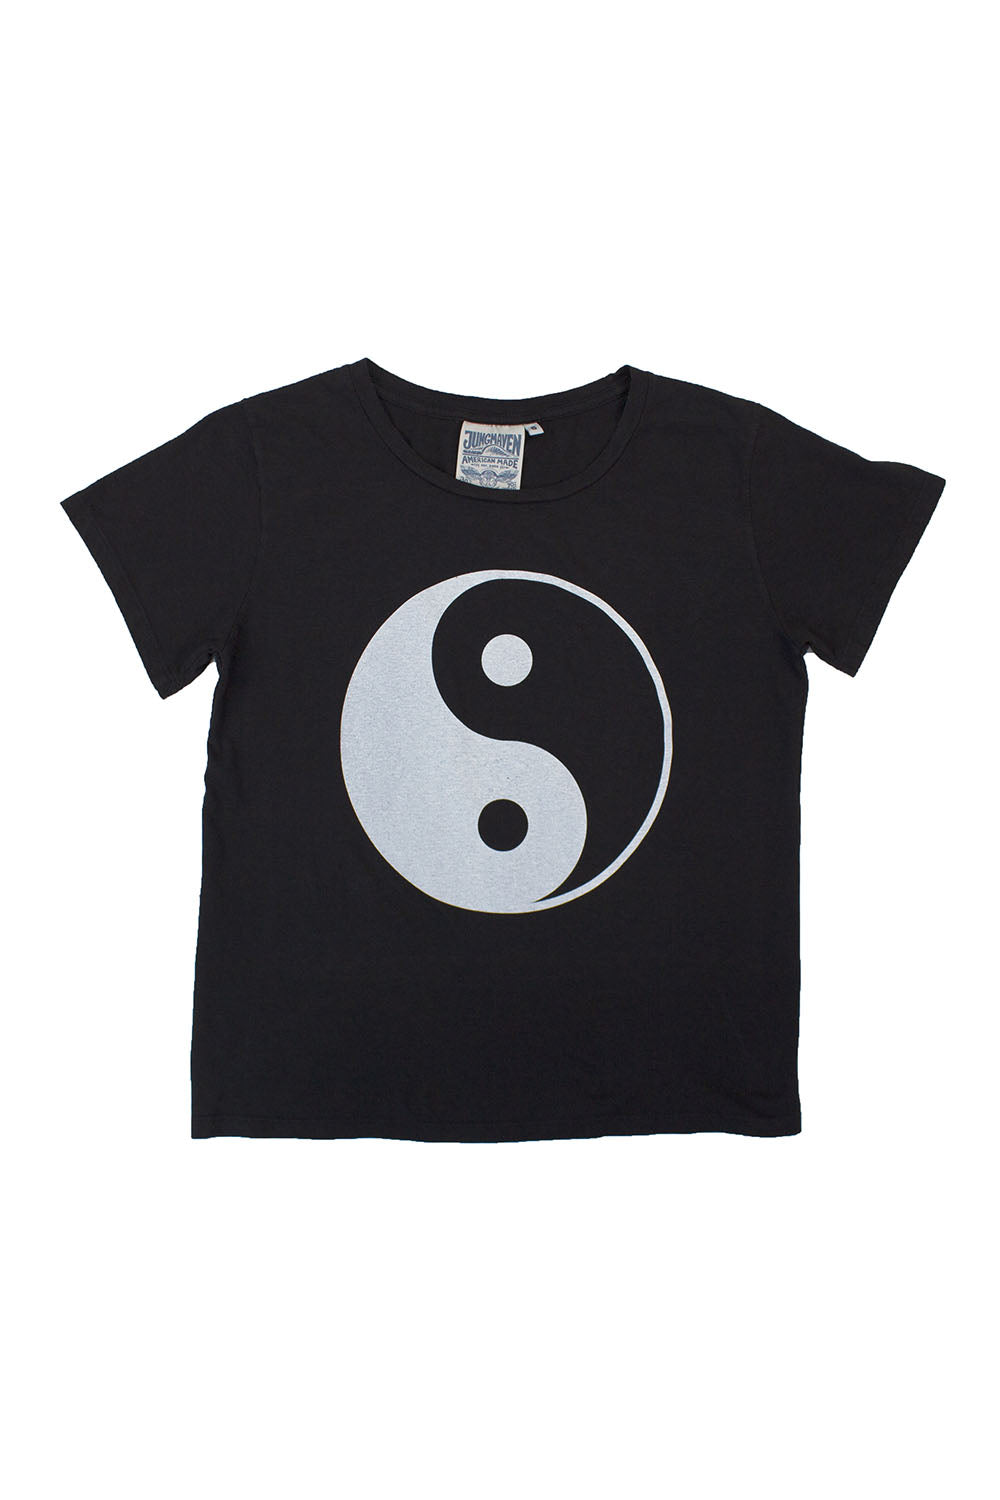 Yin Yang Ojai Tee | Jungmaven Hemp Clothing & Accessories / Color: Black